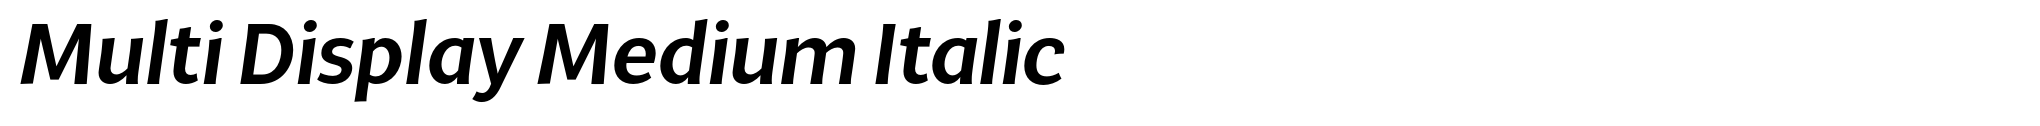 Multi Display Medium Italic image